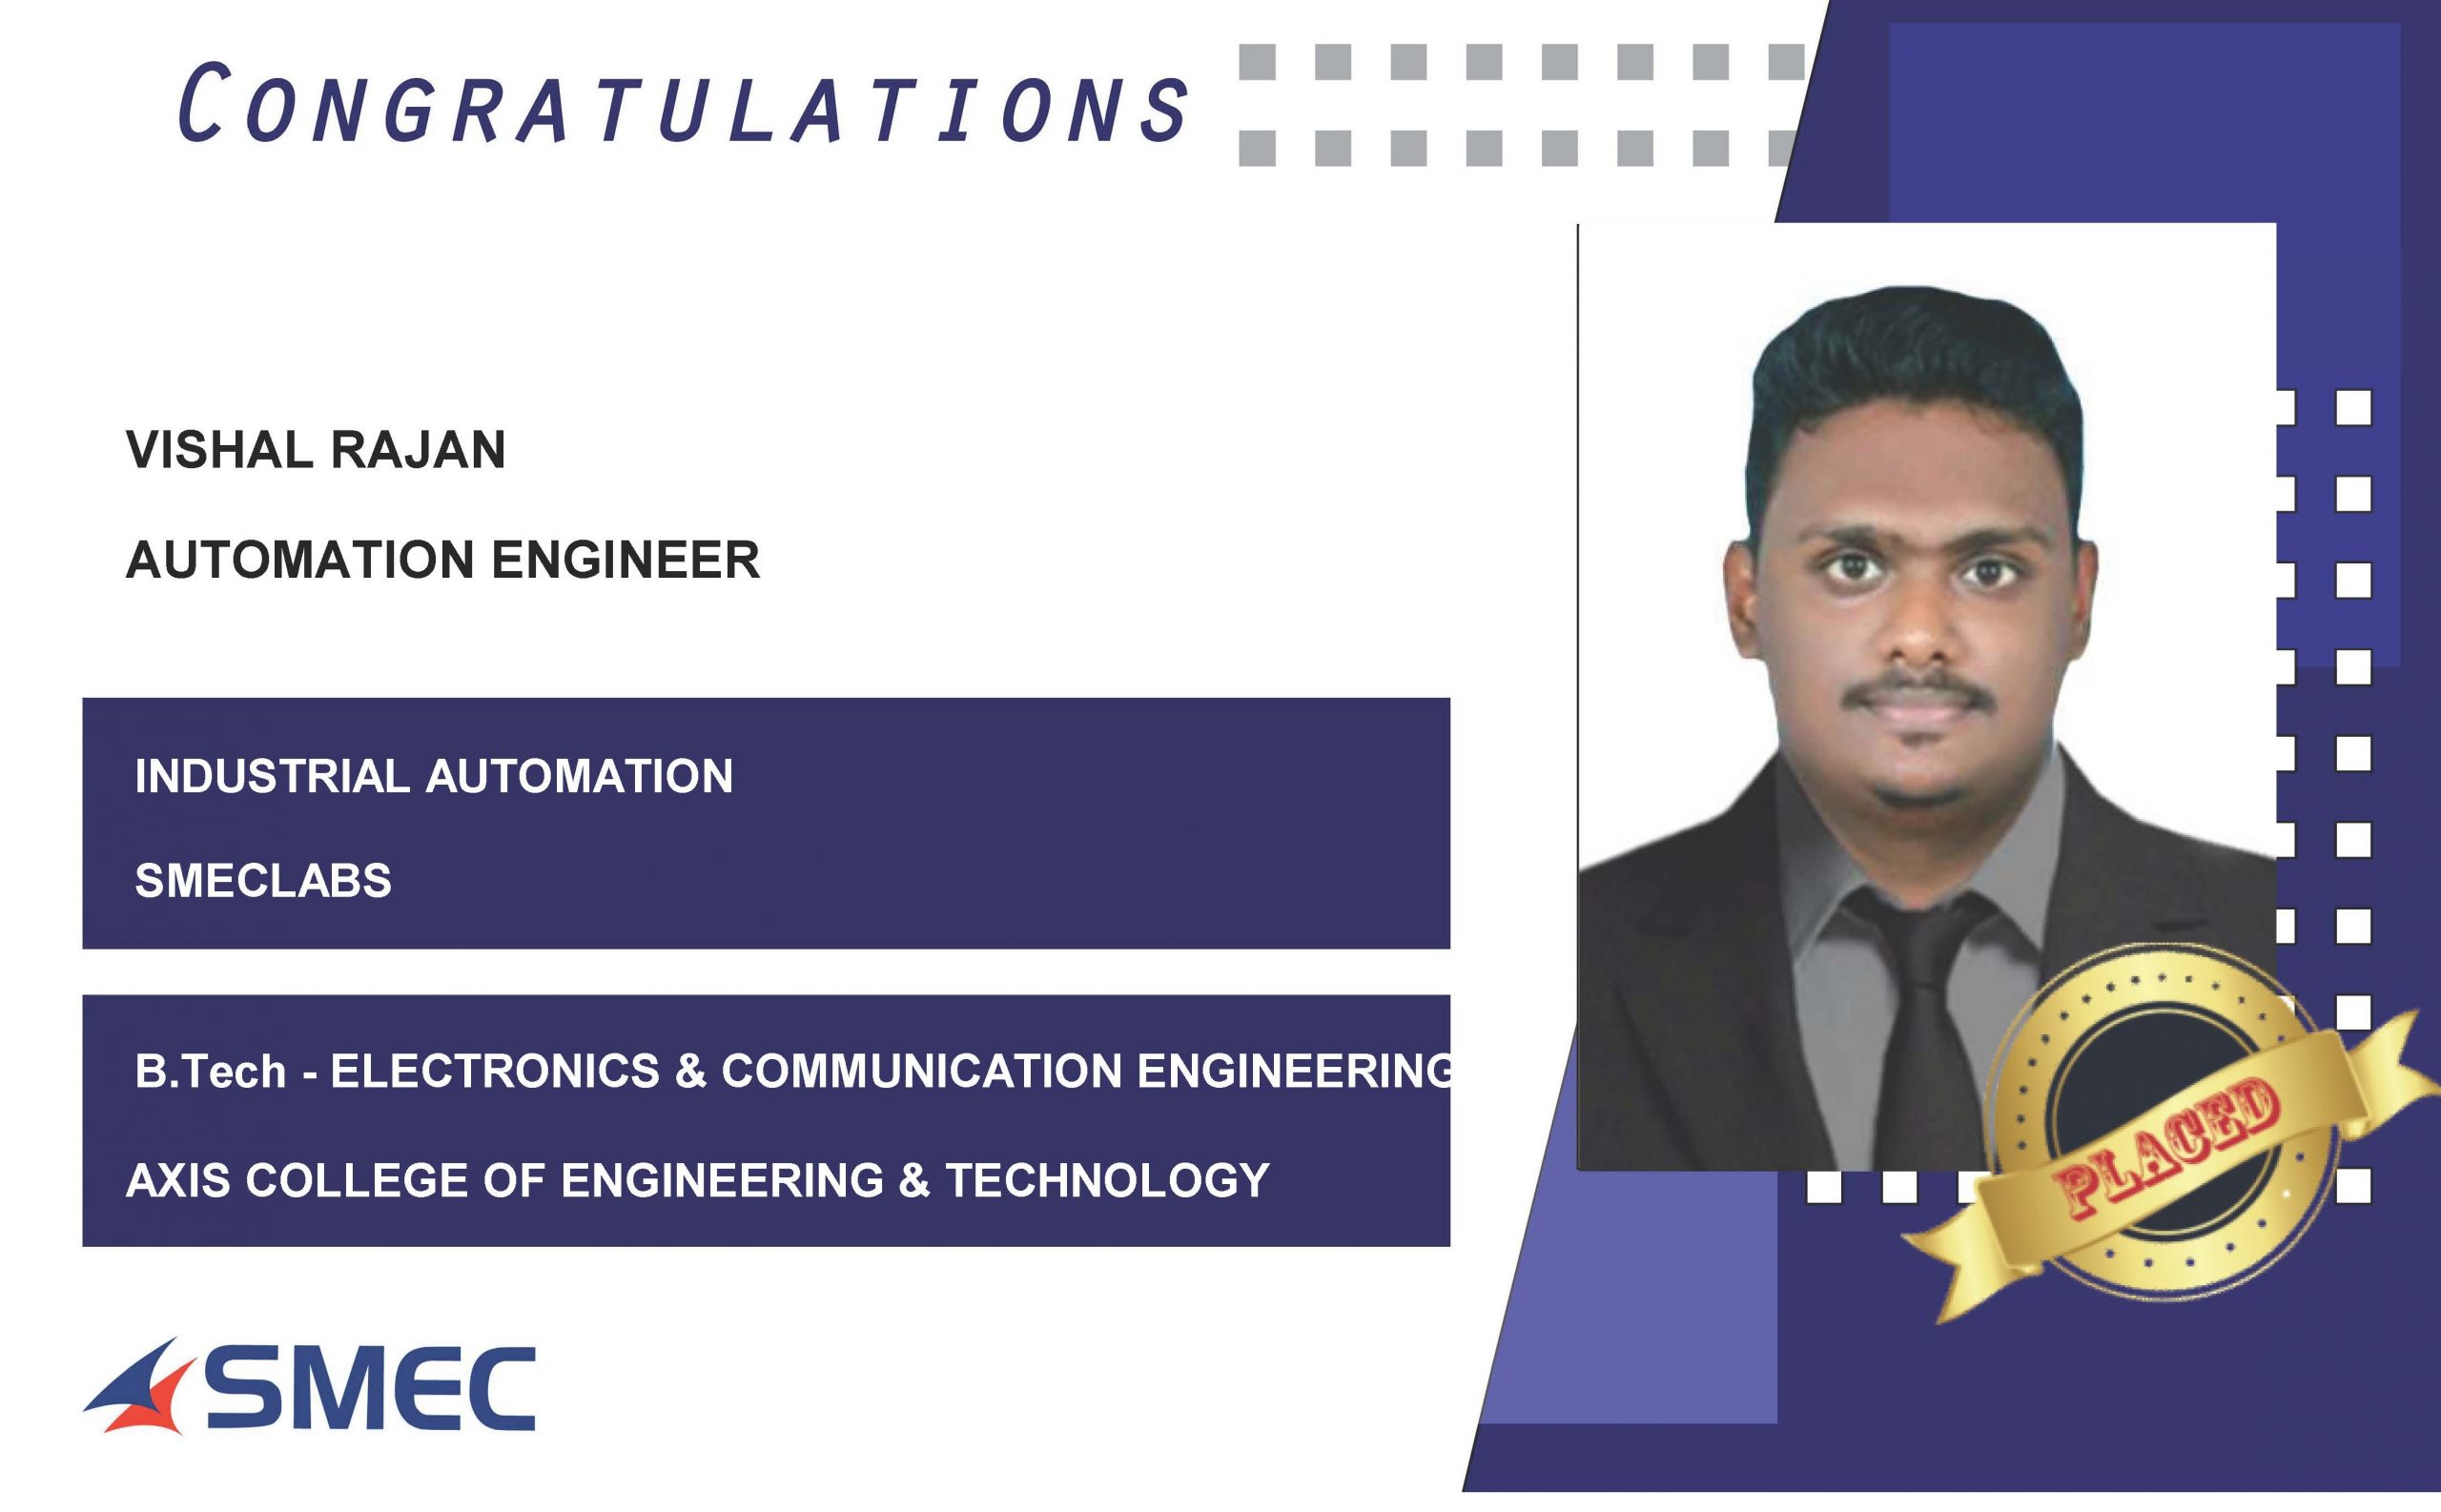 Vishal Rajan Placed Successfully as Automation Engineer